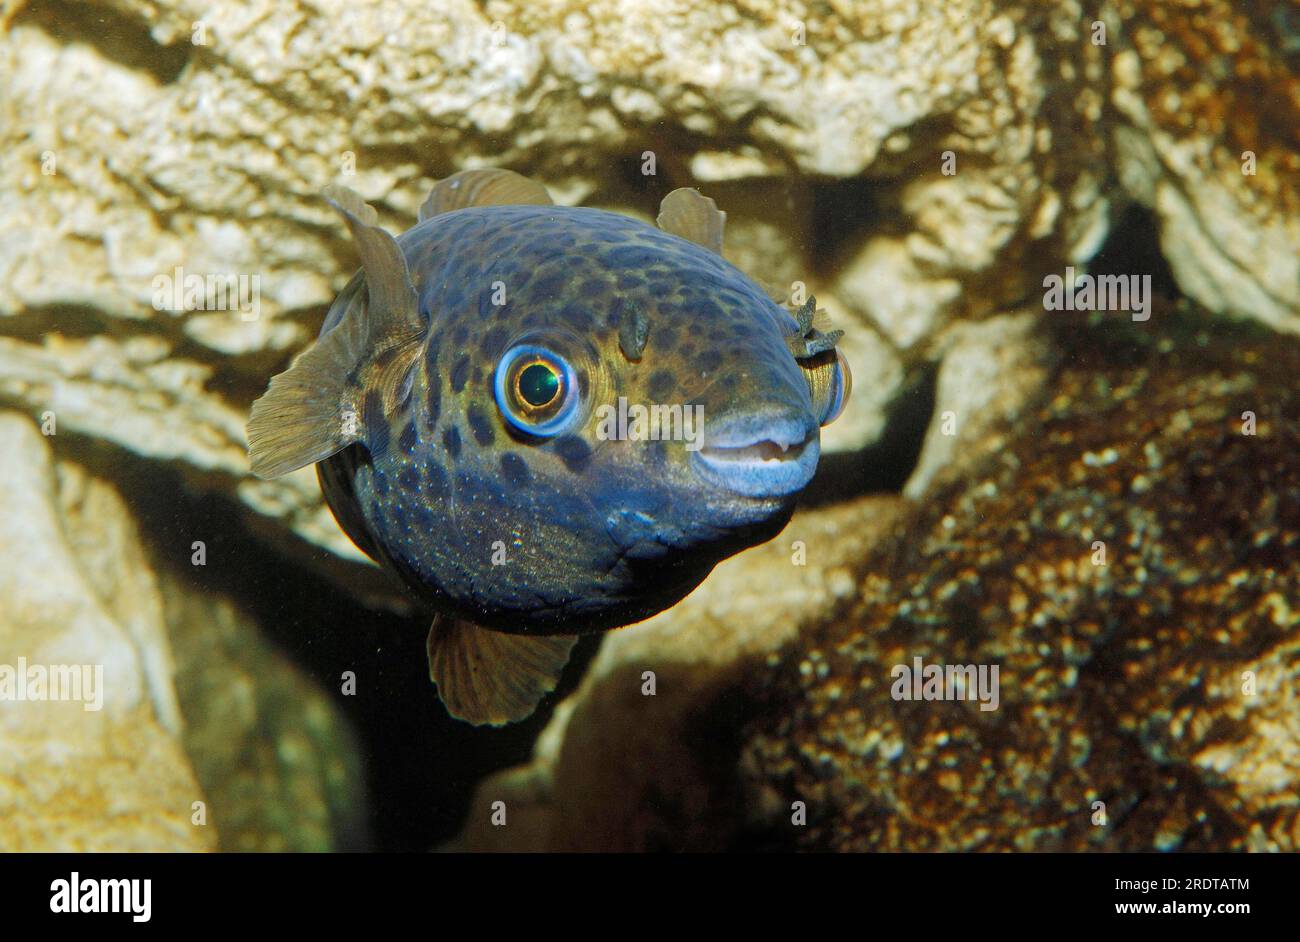 Green puffer fish (Tetraodon nigroviridis) Stock Photo